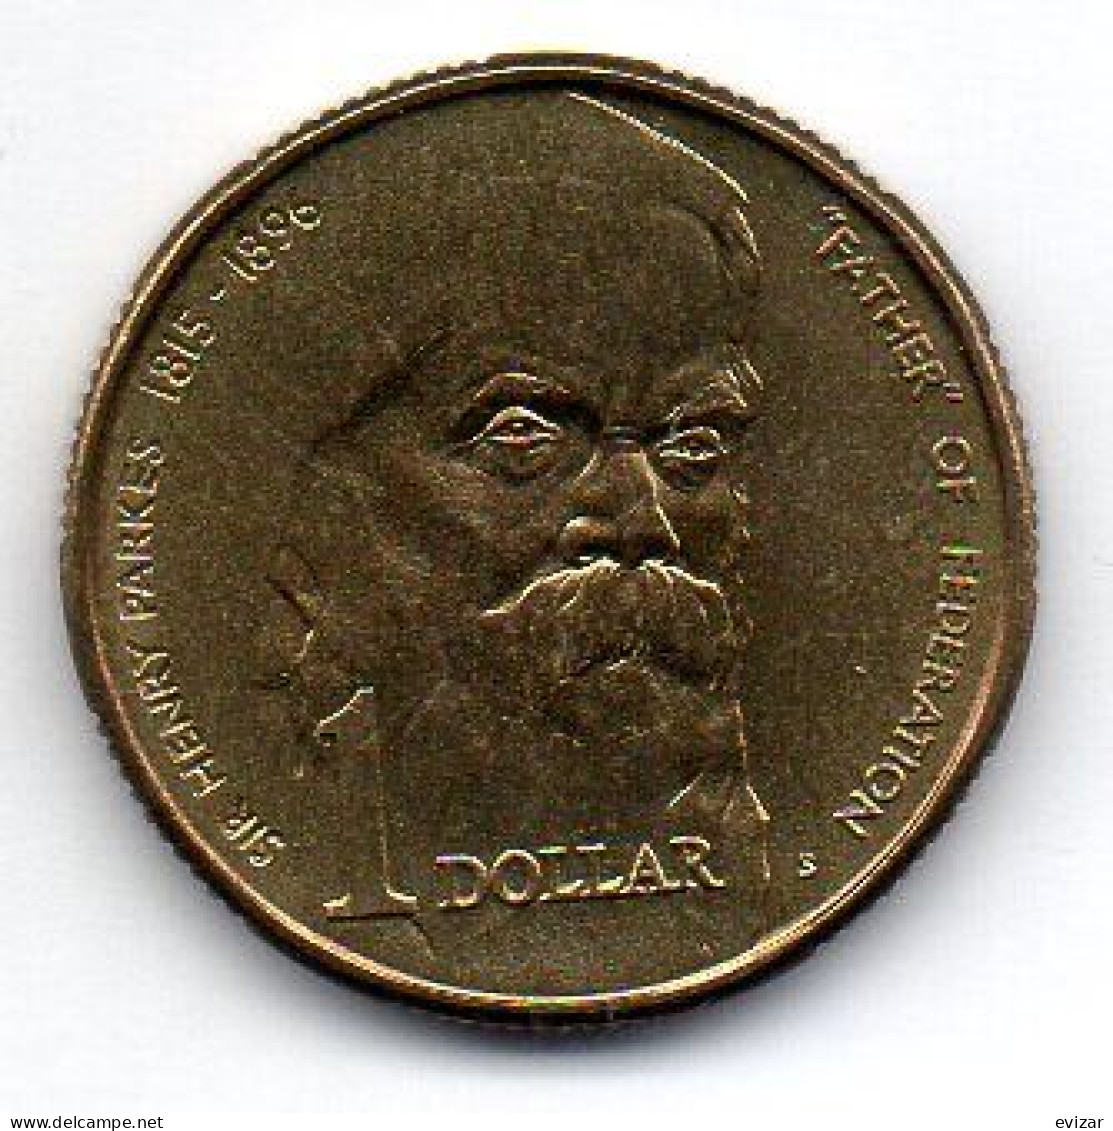 AUSTRALIA, 1 Dollar, Nickel-Aluminum-Copper, Year 1996-S, KM # 310 - Dollar